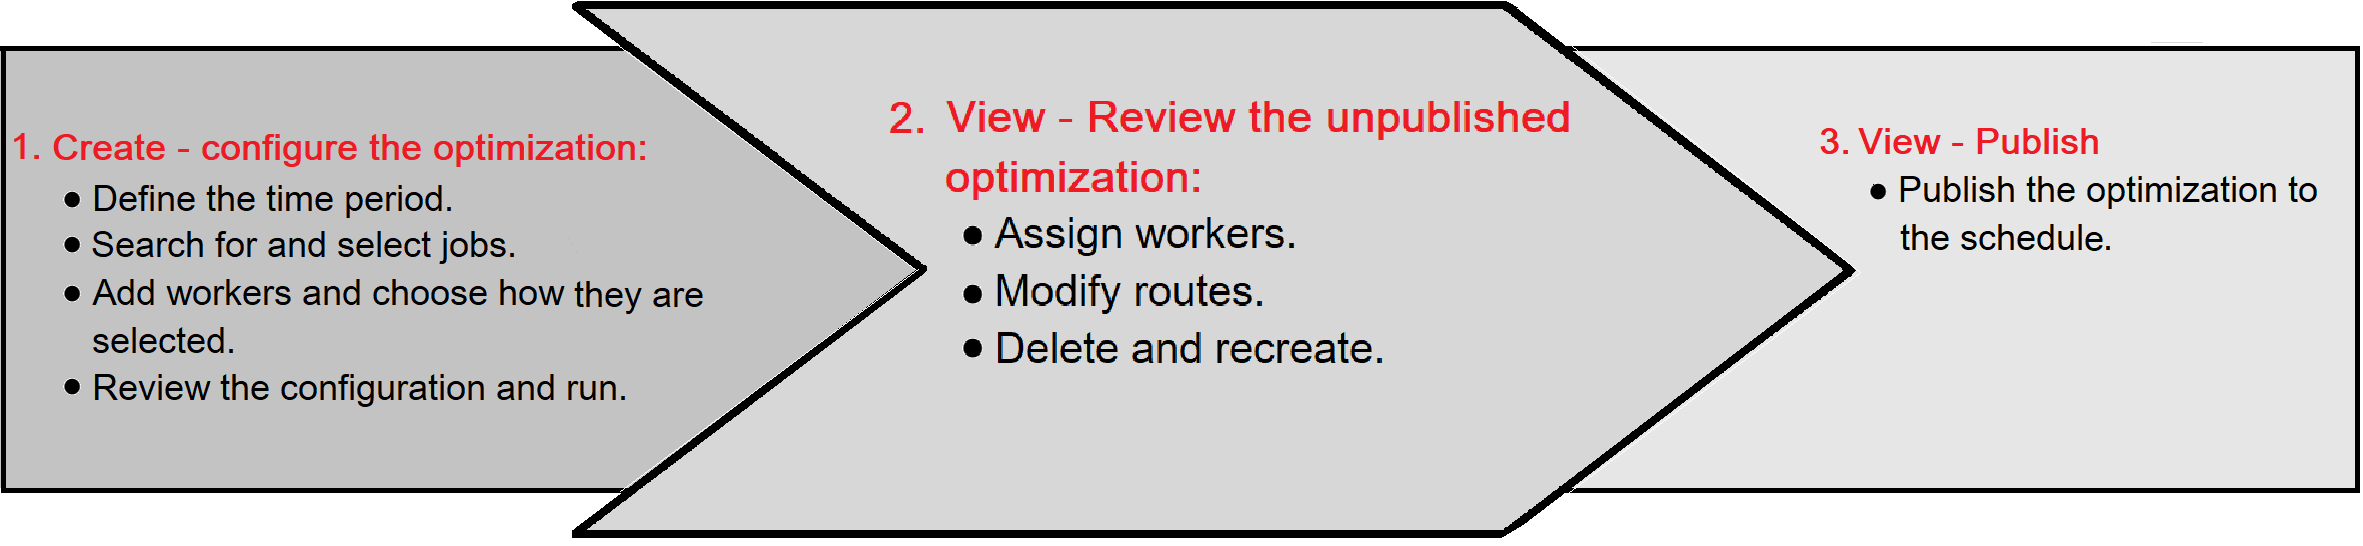 Optimization_process_Step_2_Full.png